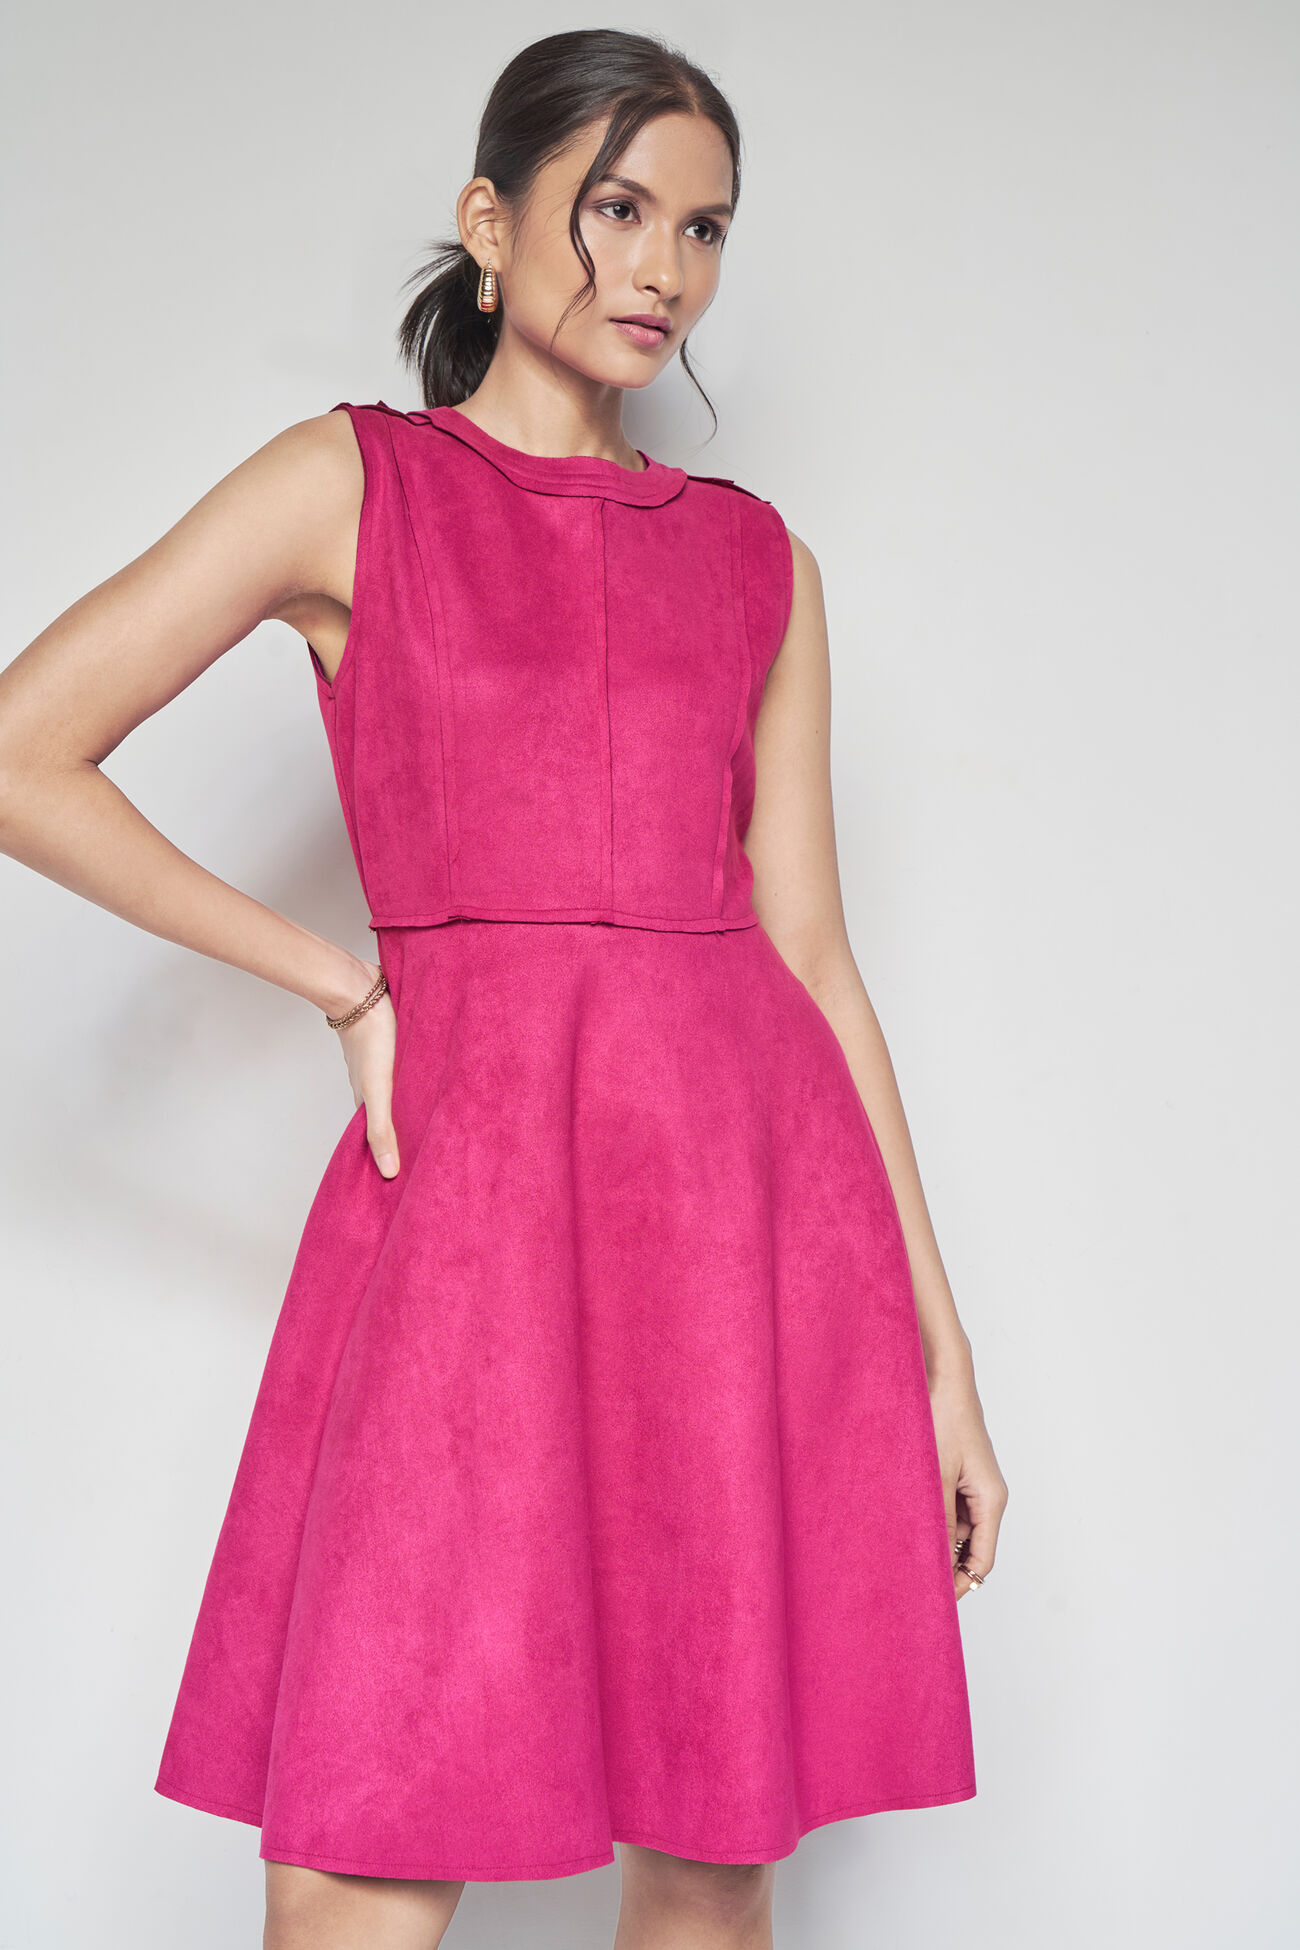 Alexis Dress, Dark Pink, image 1